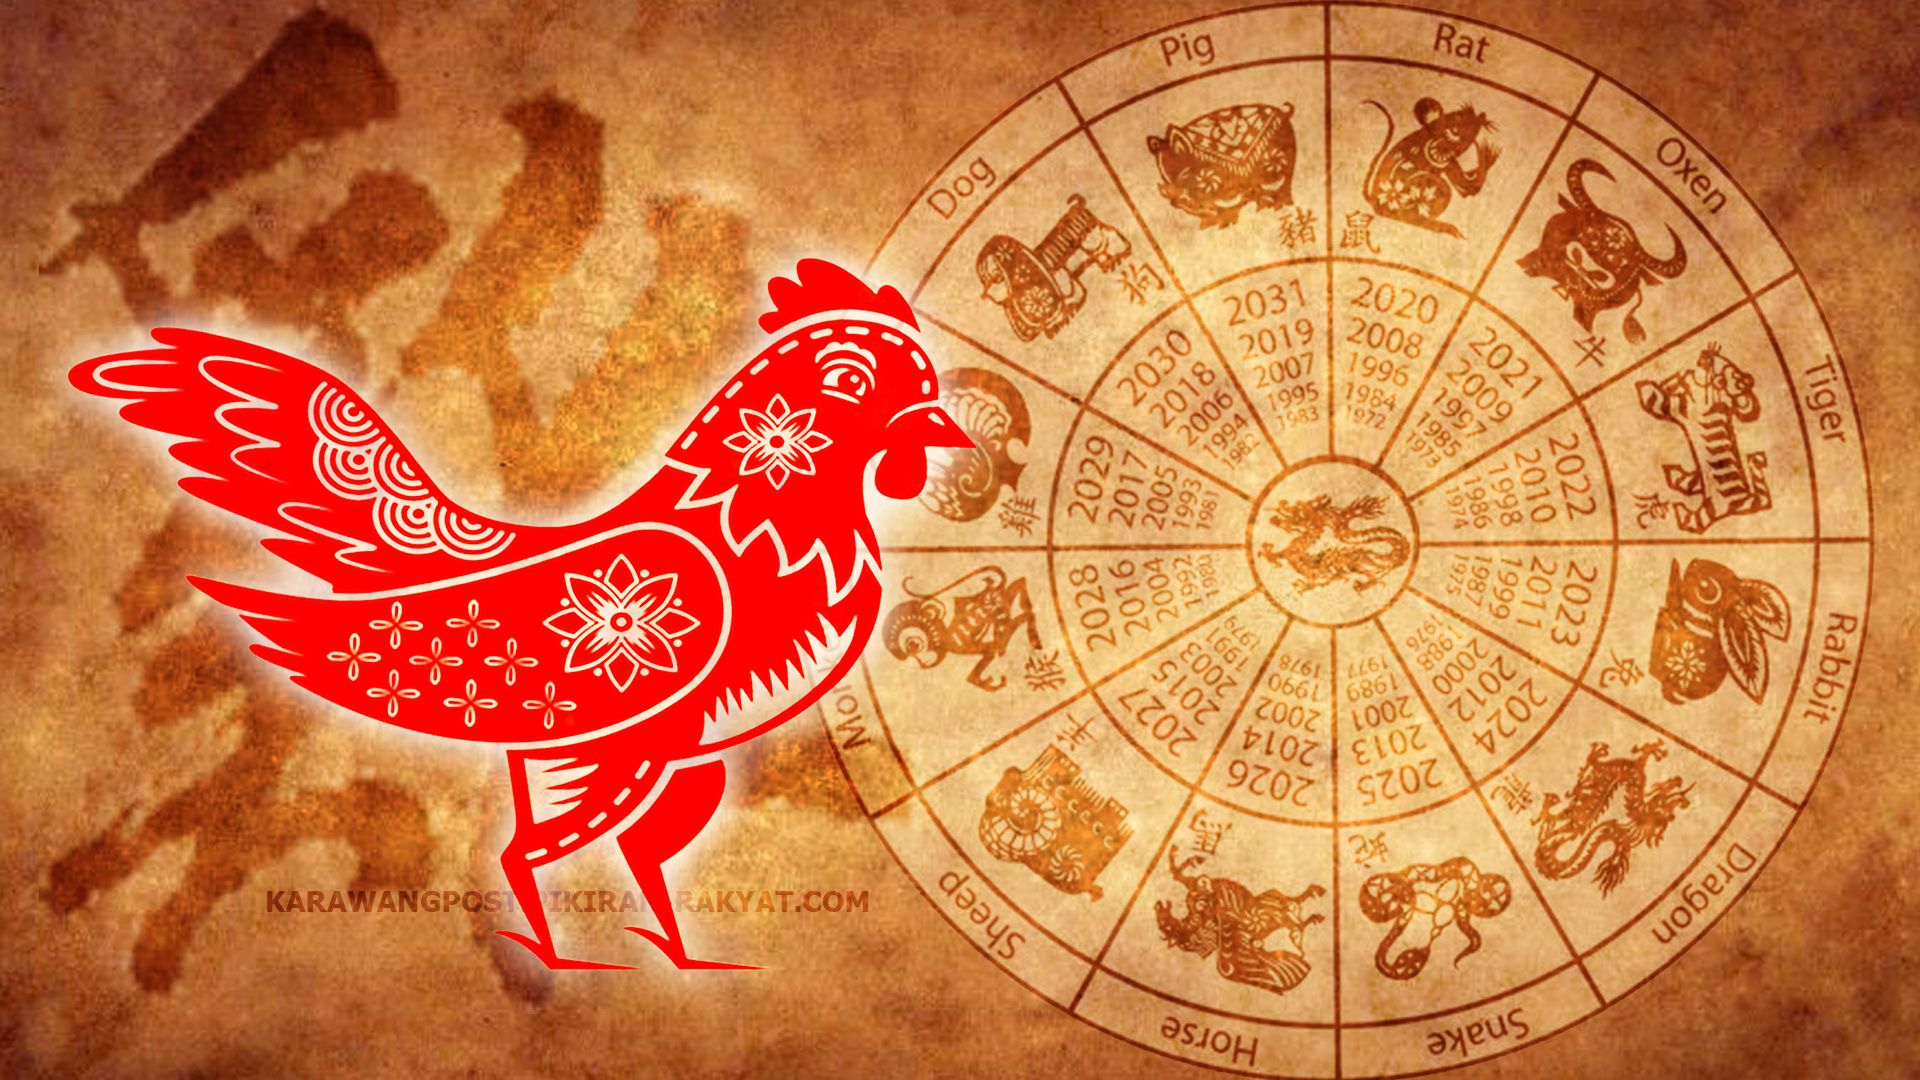 Ilustrasi Shio Ayam Jantan Dalam Astrologi Cina